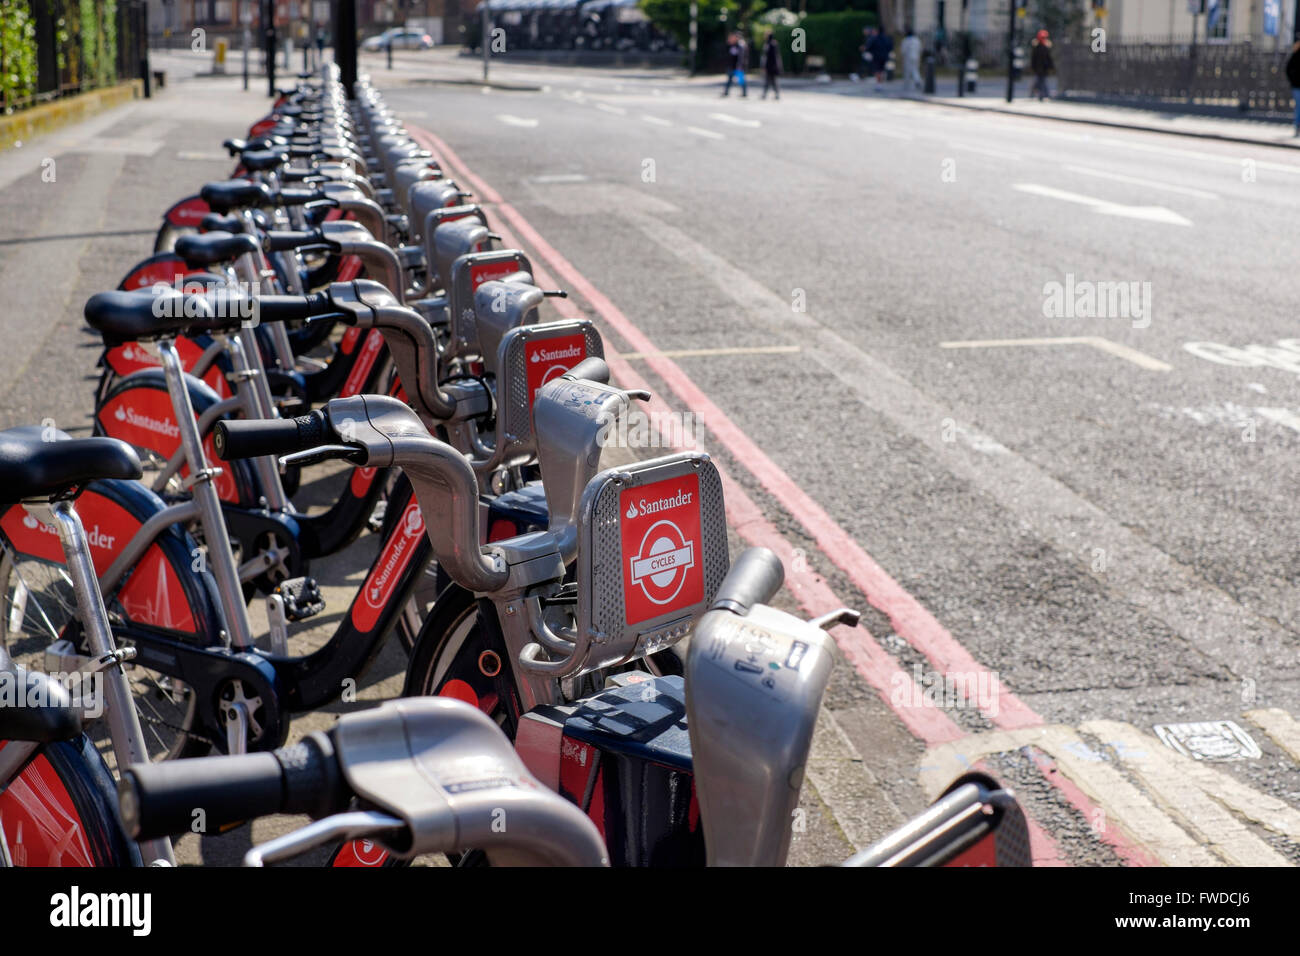 Cycles de Santander, station d'Hampstead Road, London, England, UK Banque D'Images